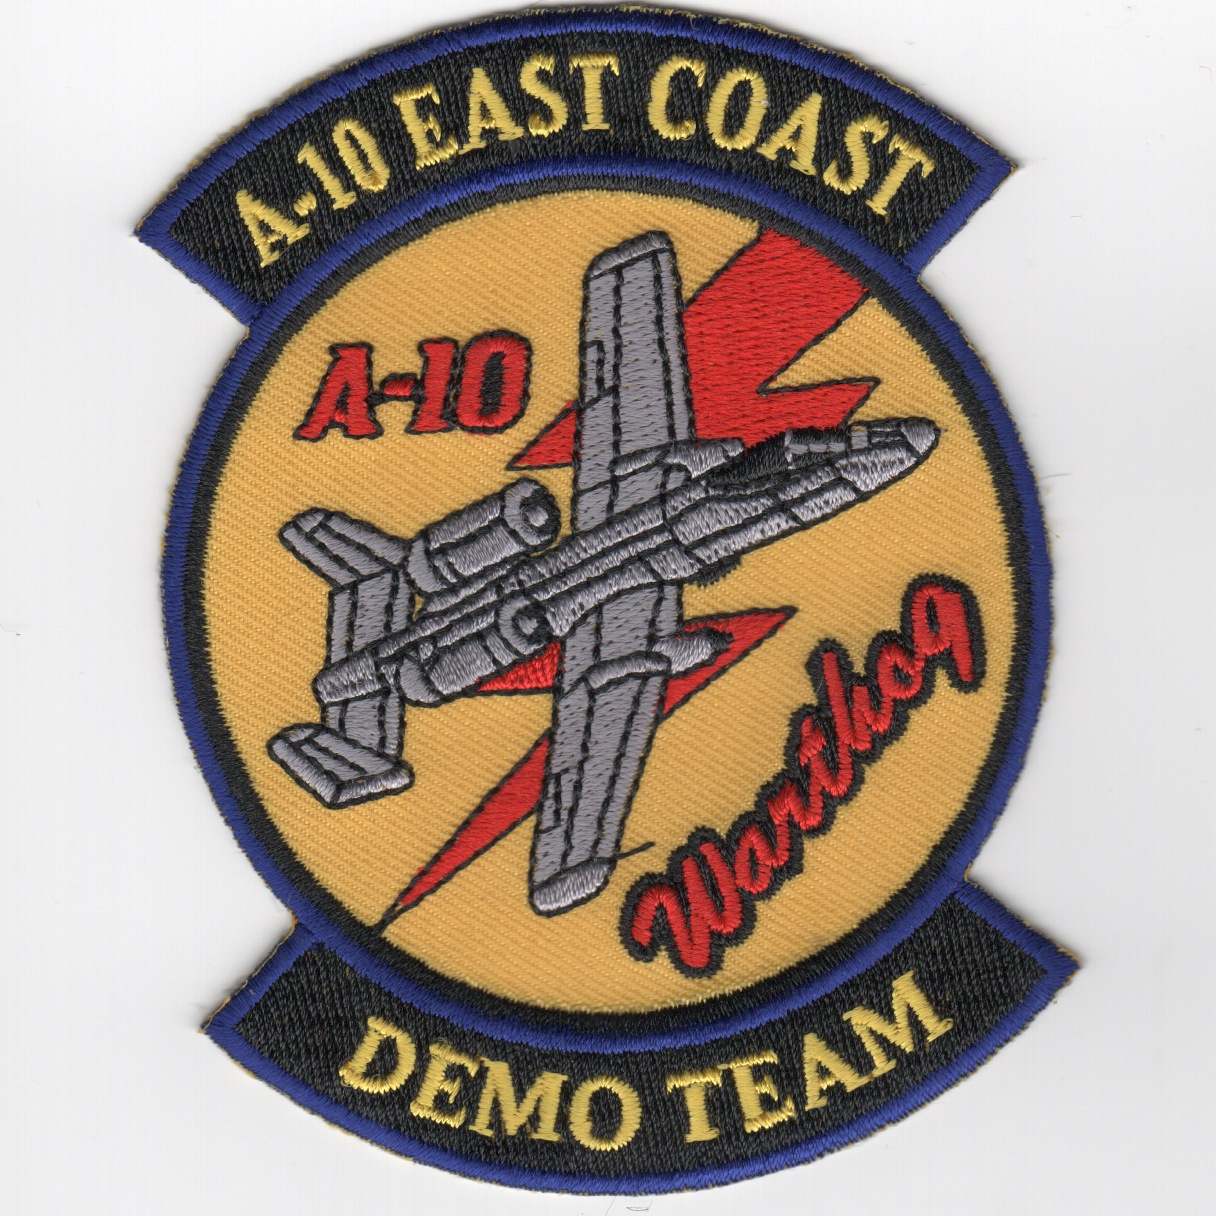 A-10 EAST Coast Demo Team (2 Tabs)